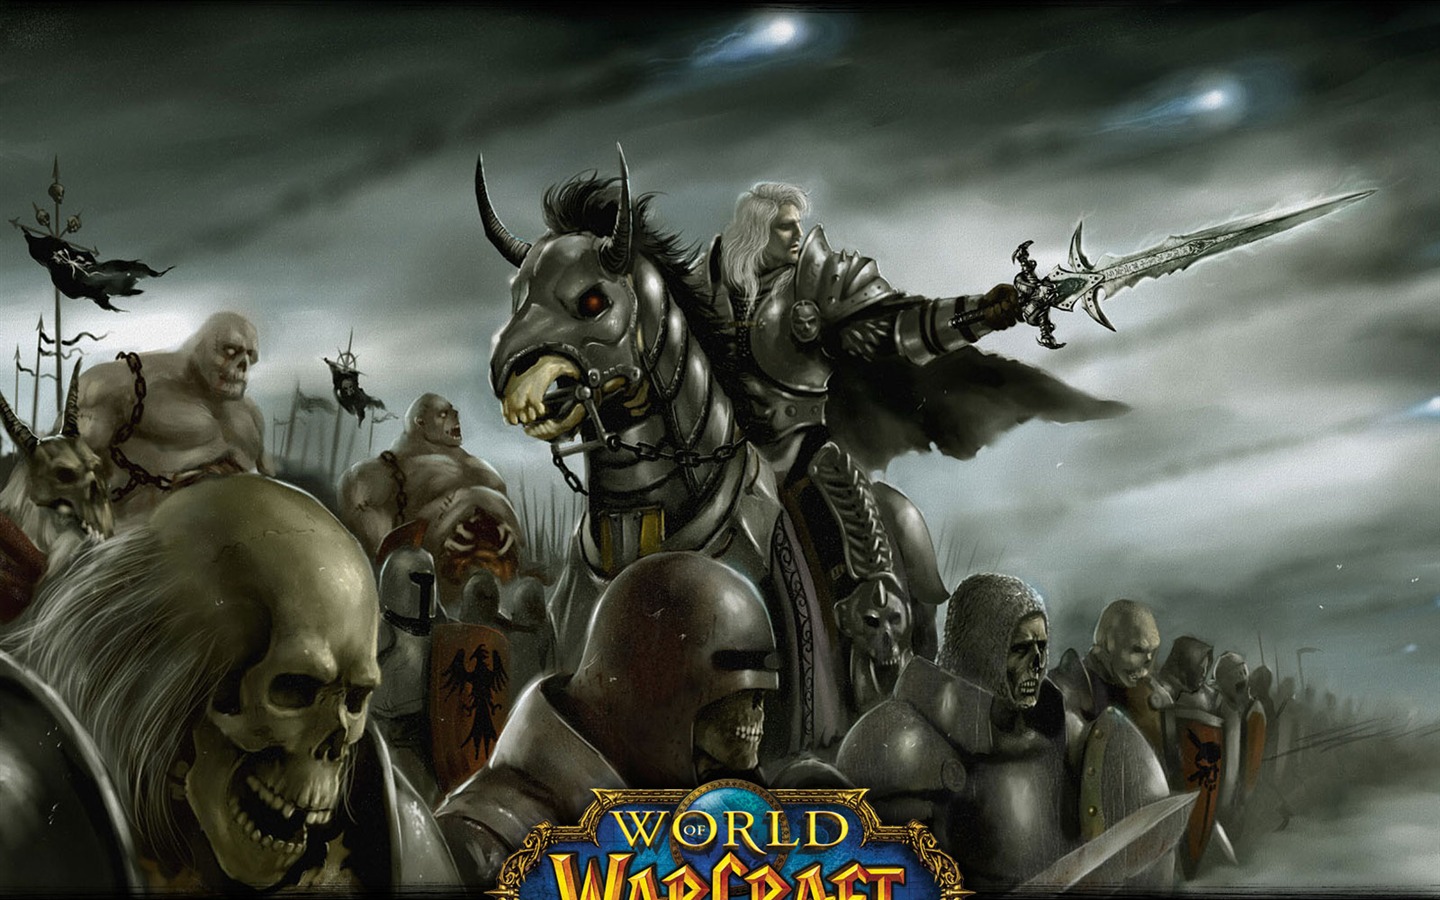 World of Warcraft 魔兽世界高清壁纸(二)3 - 1440x900